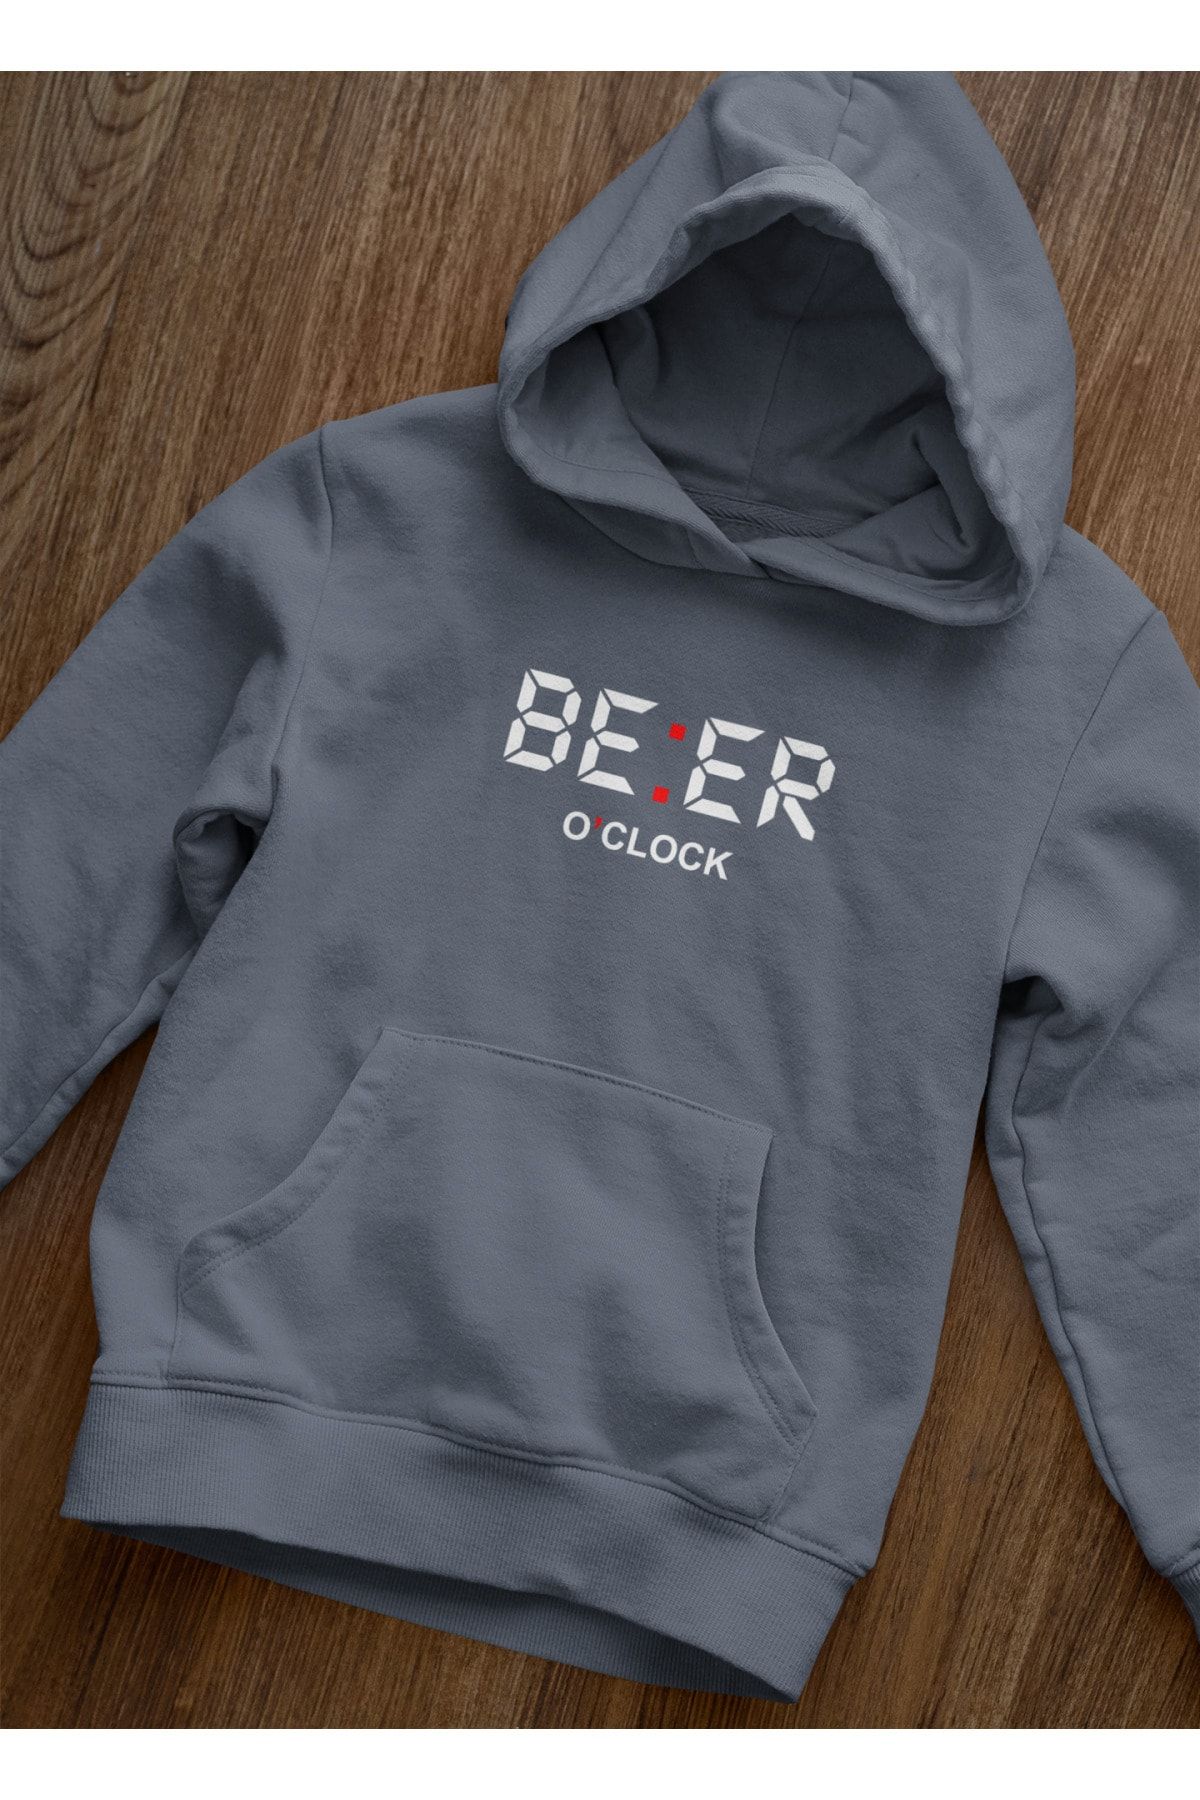 troutlet Bira Saati - Beer O'clock - Tasarım Sweatshirt